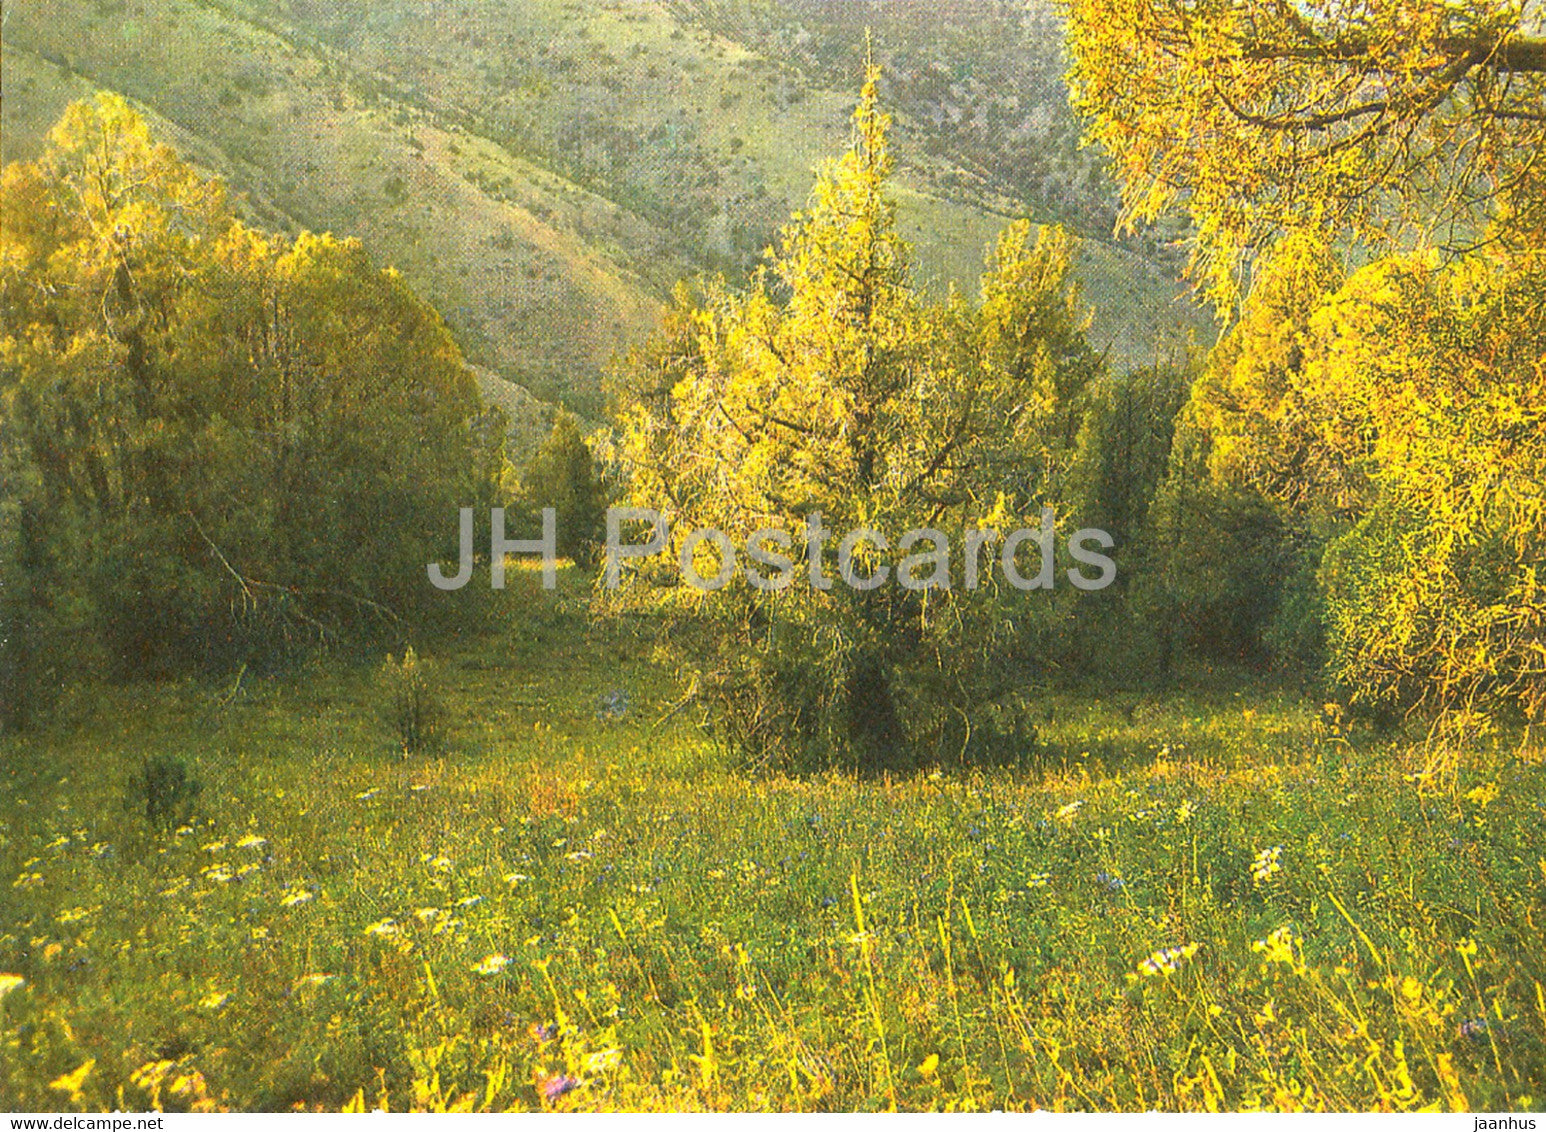 Juniper forest of the Zaamin reserve - Nature Trails - 1981 - Uzbekistan USSR - unused - JH Postcards